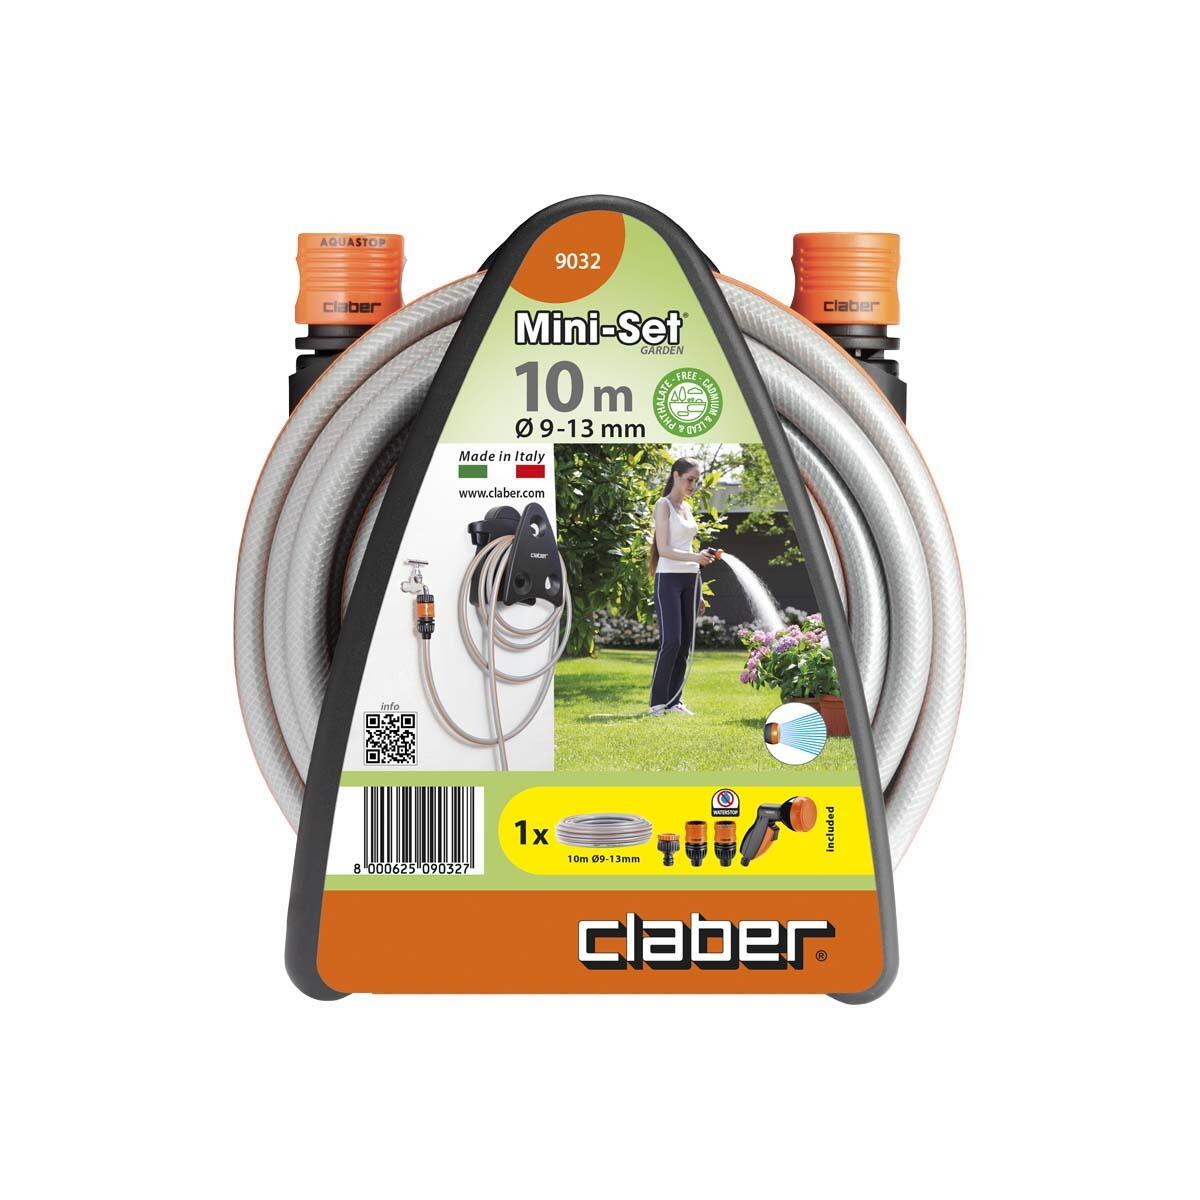 Claber Mini Garden Hose Reel 10m